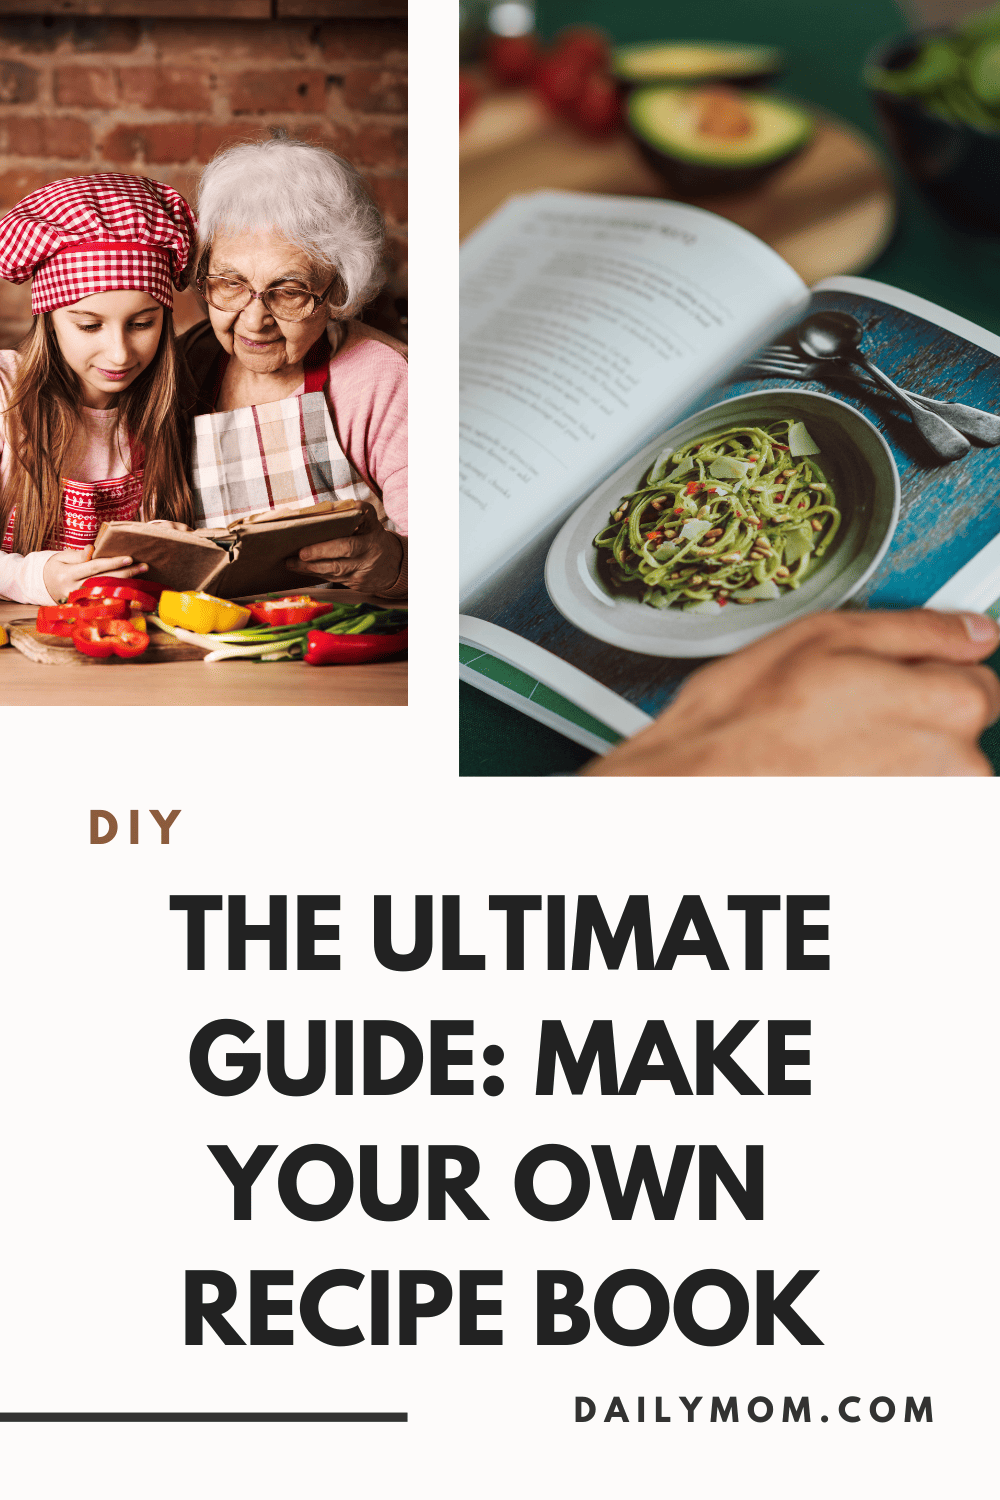 Daily Mom Parent Portal Make Your Own Recipe Book